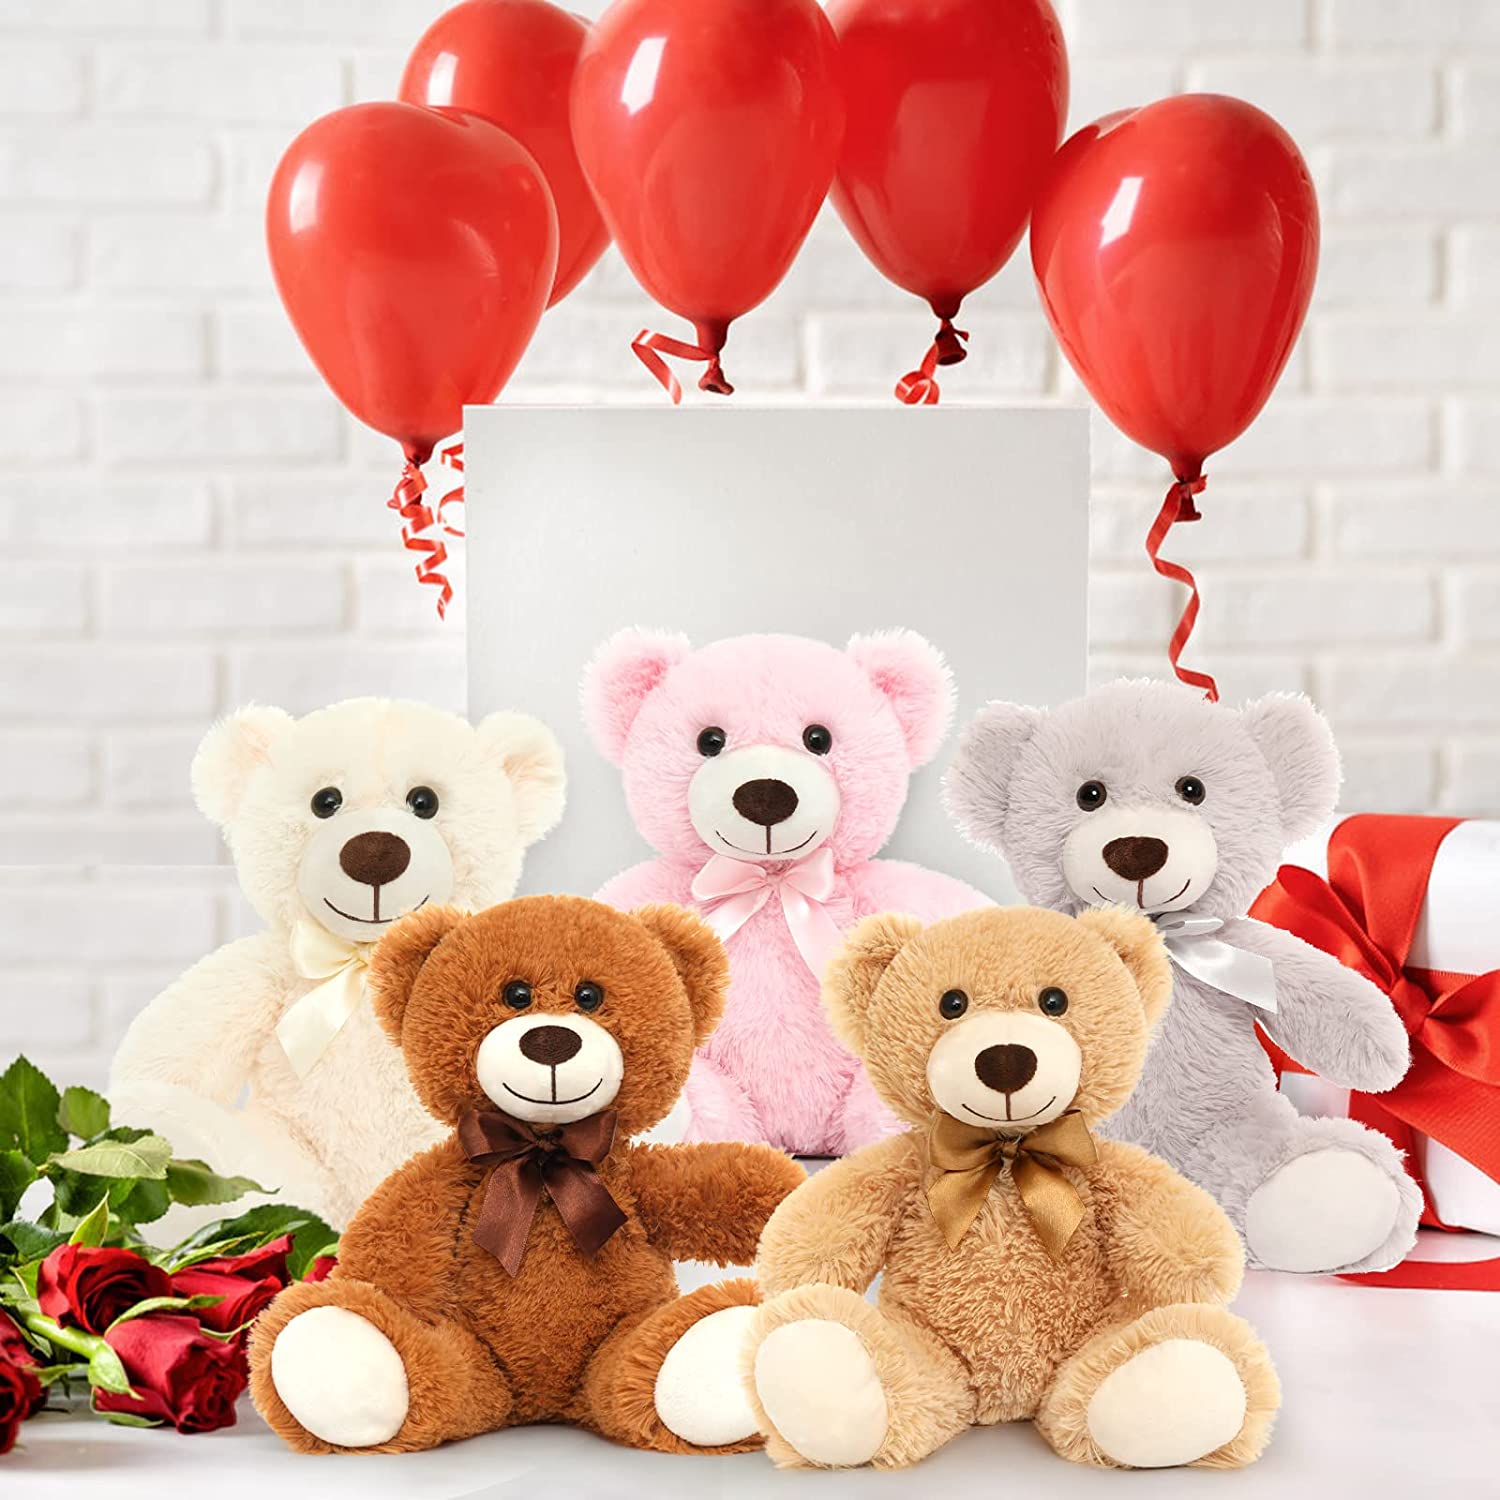 5 Piece Teddy Bears Stuffed Animal, 14 Inches